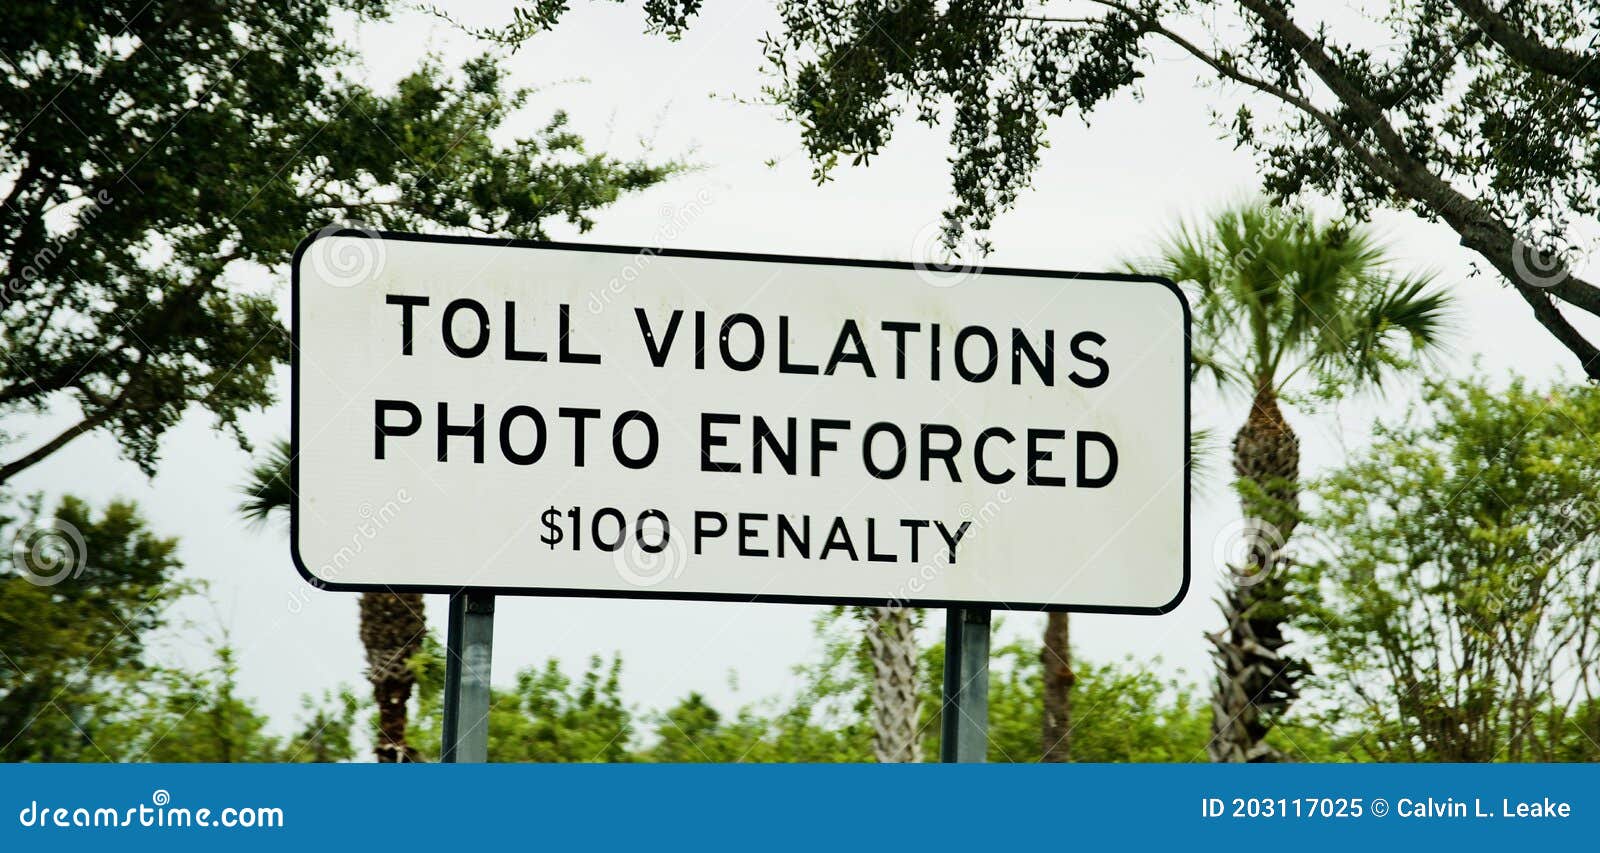 Toll Violations Photo Enforced Stock Image - Image of enterprise, street:  203117025